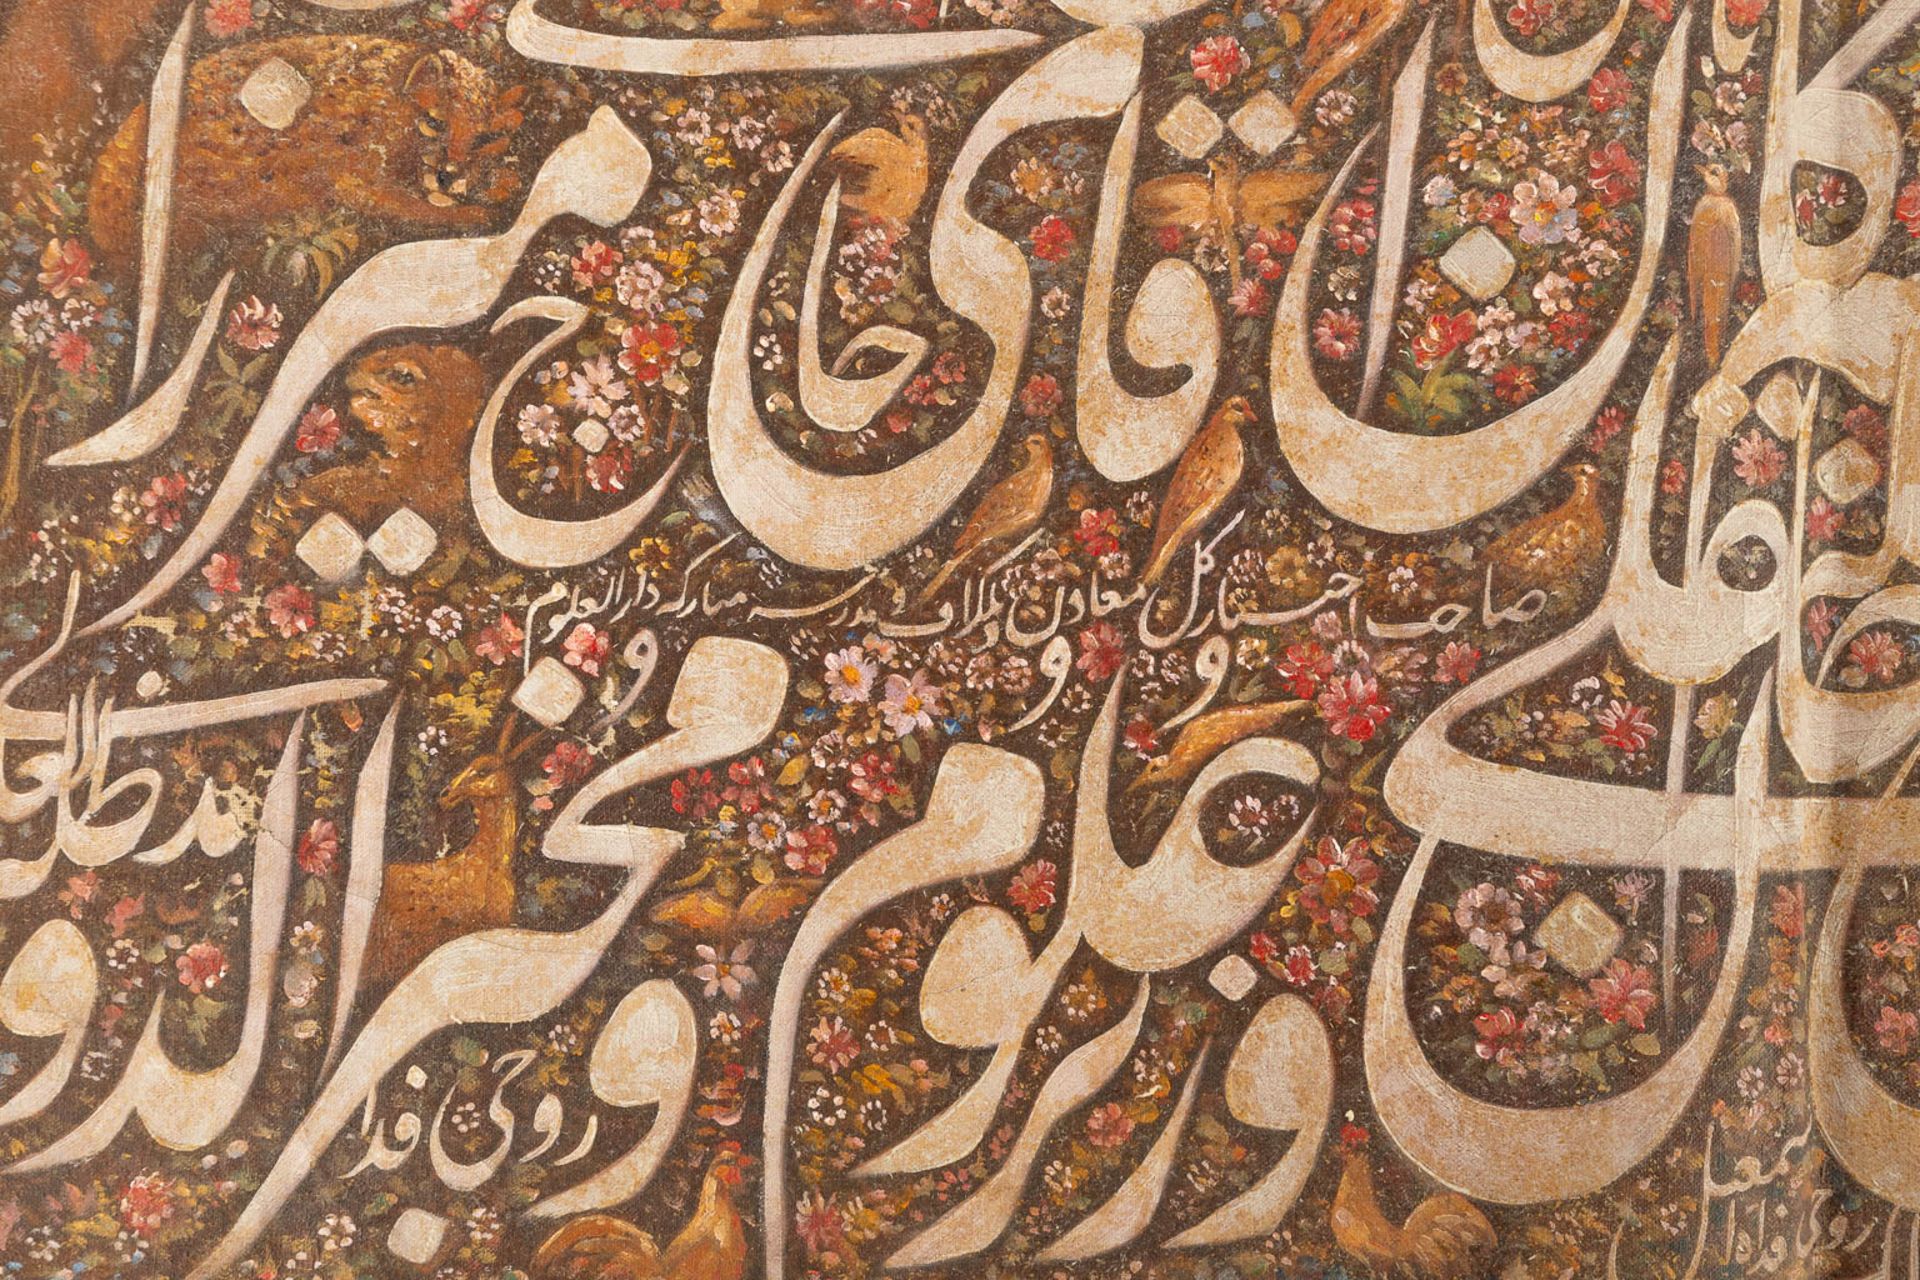 Naqash Bashi, Jalairi, A Persian calligraphic oil painting. Qajar era. (W:60 x H:34 cm) - Image 3 of 7